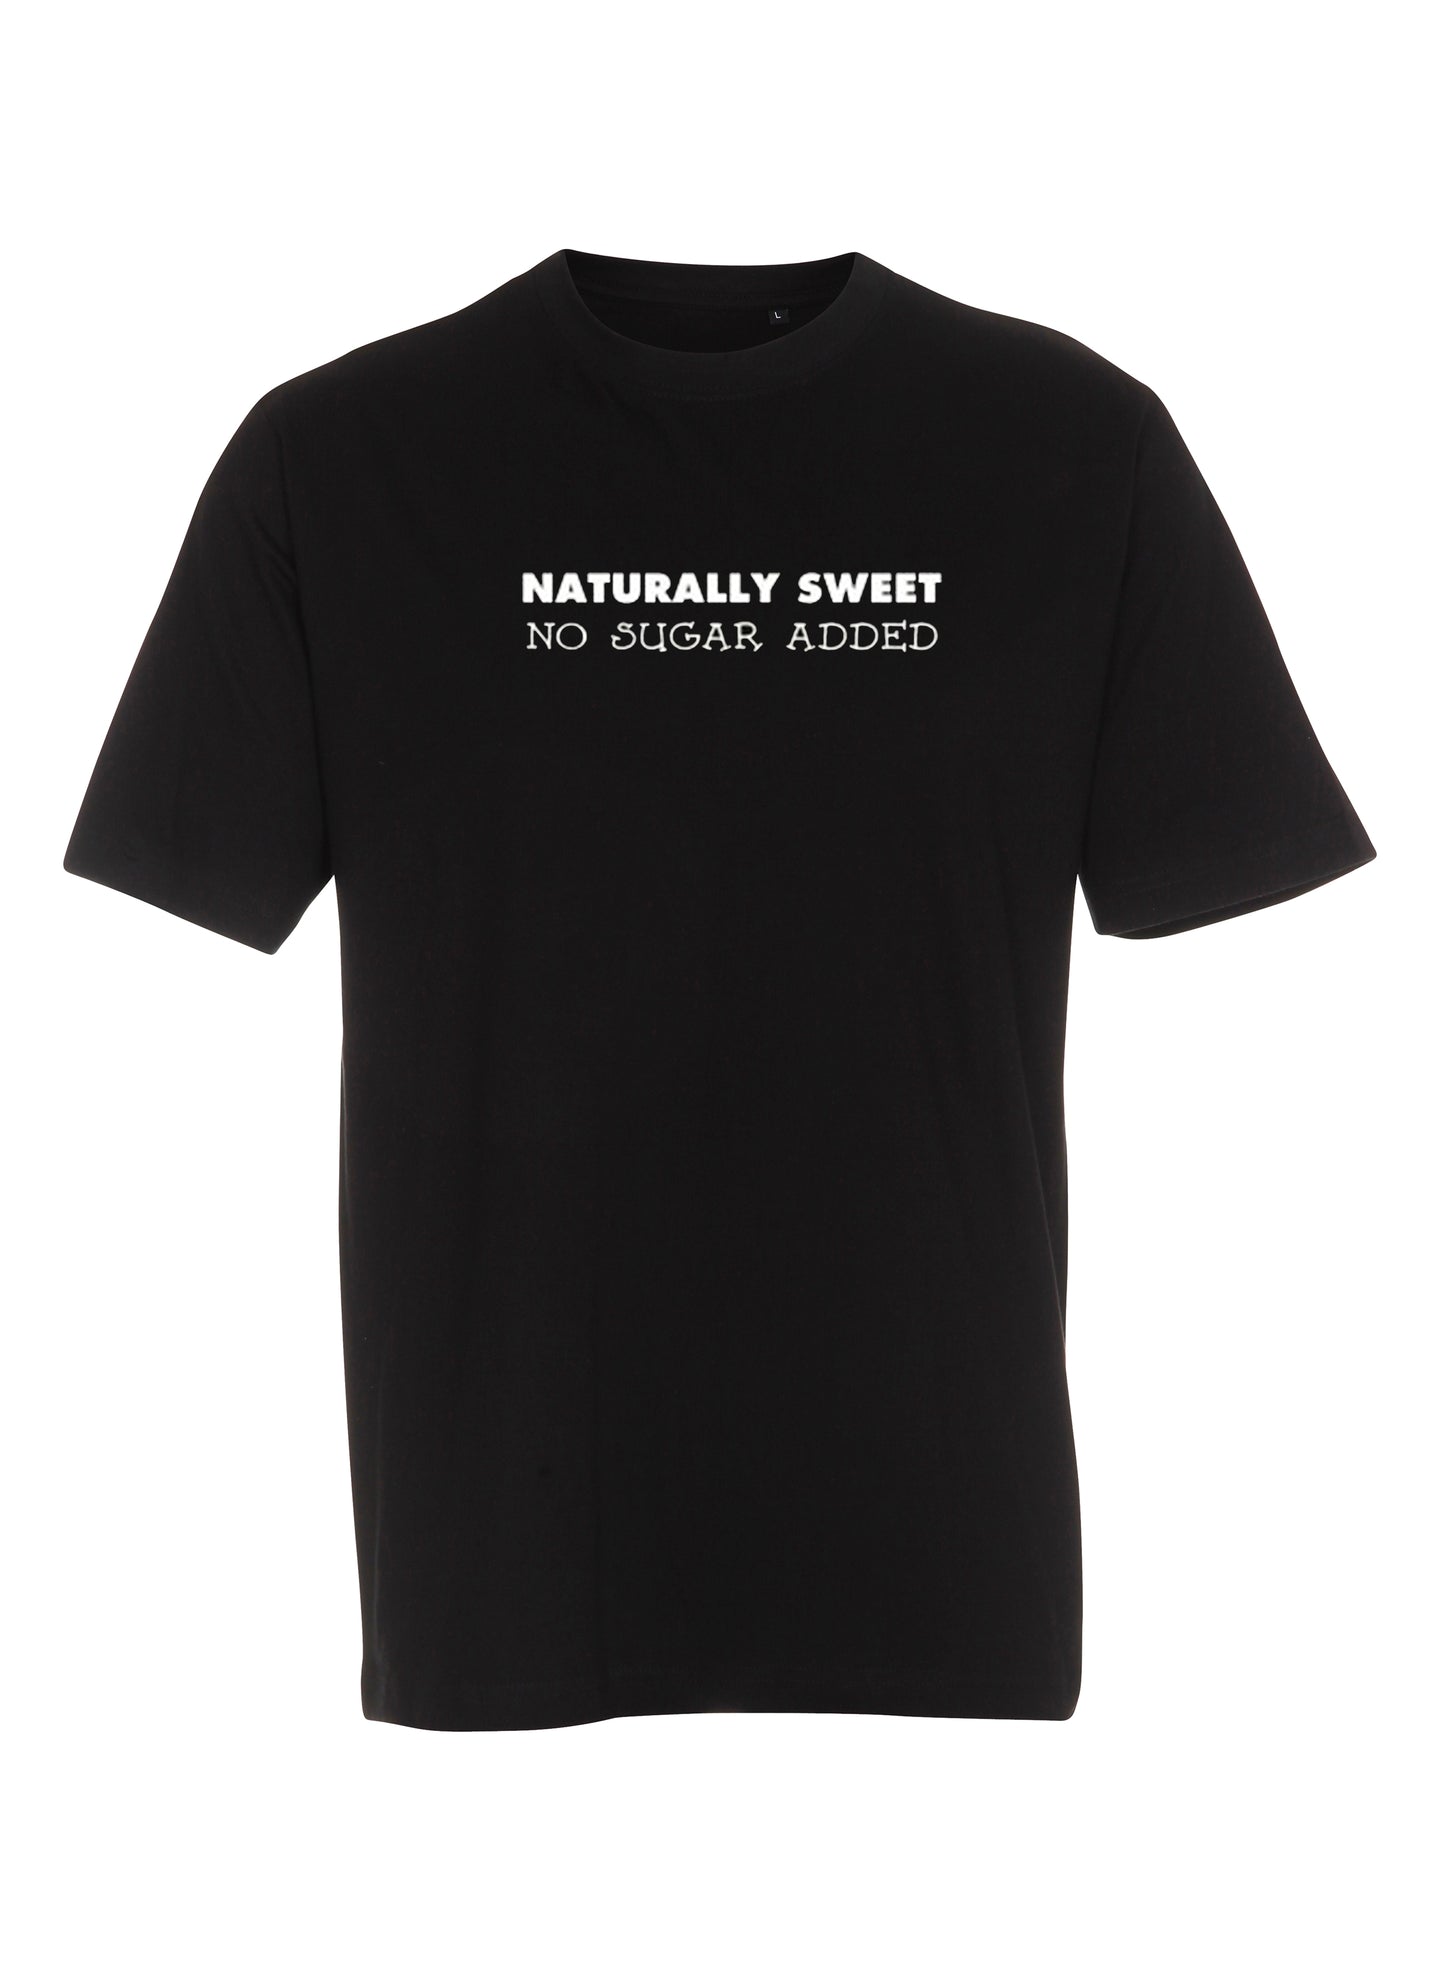 Naturally sweet no sugar added (børne t-shirt)